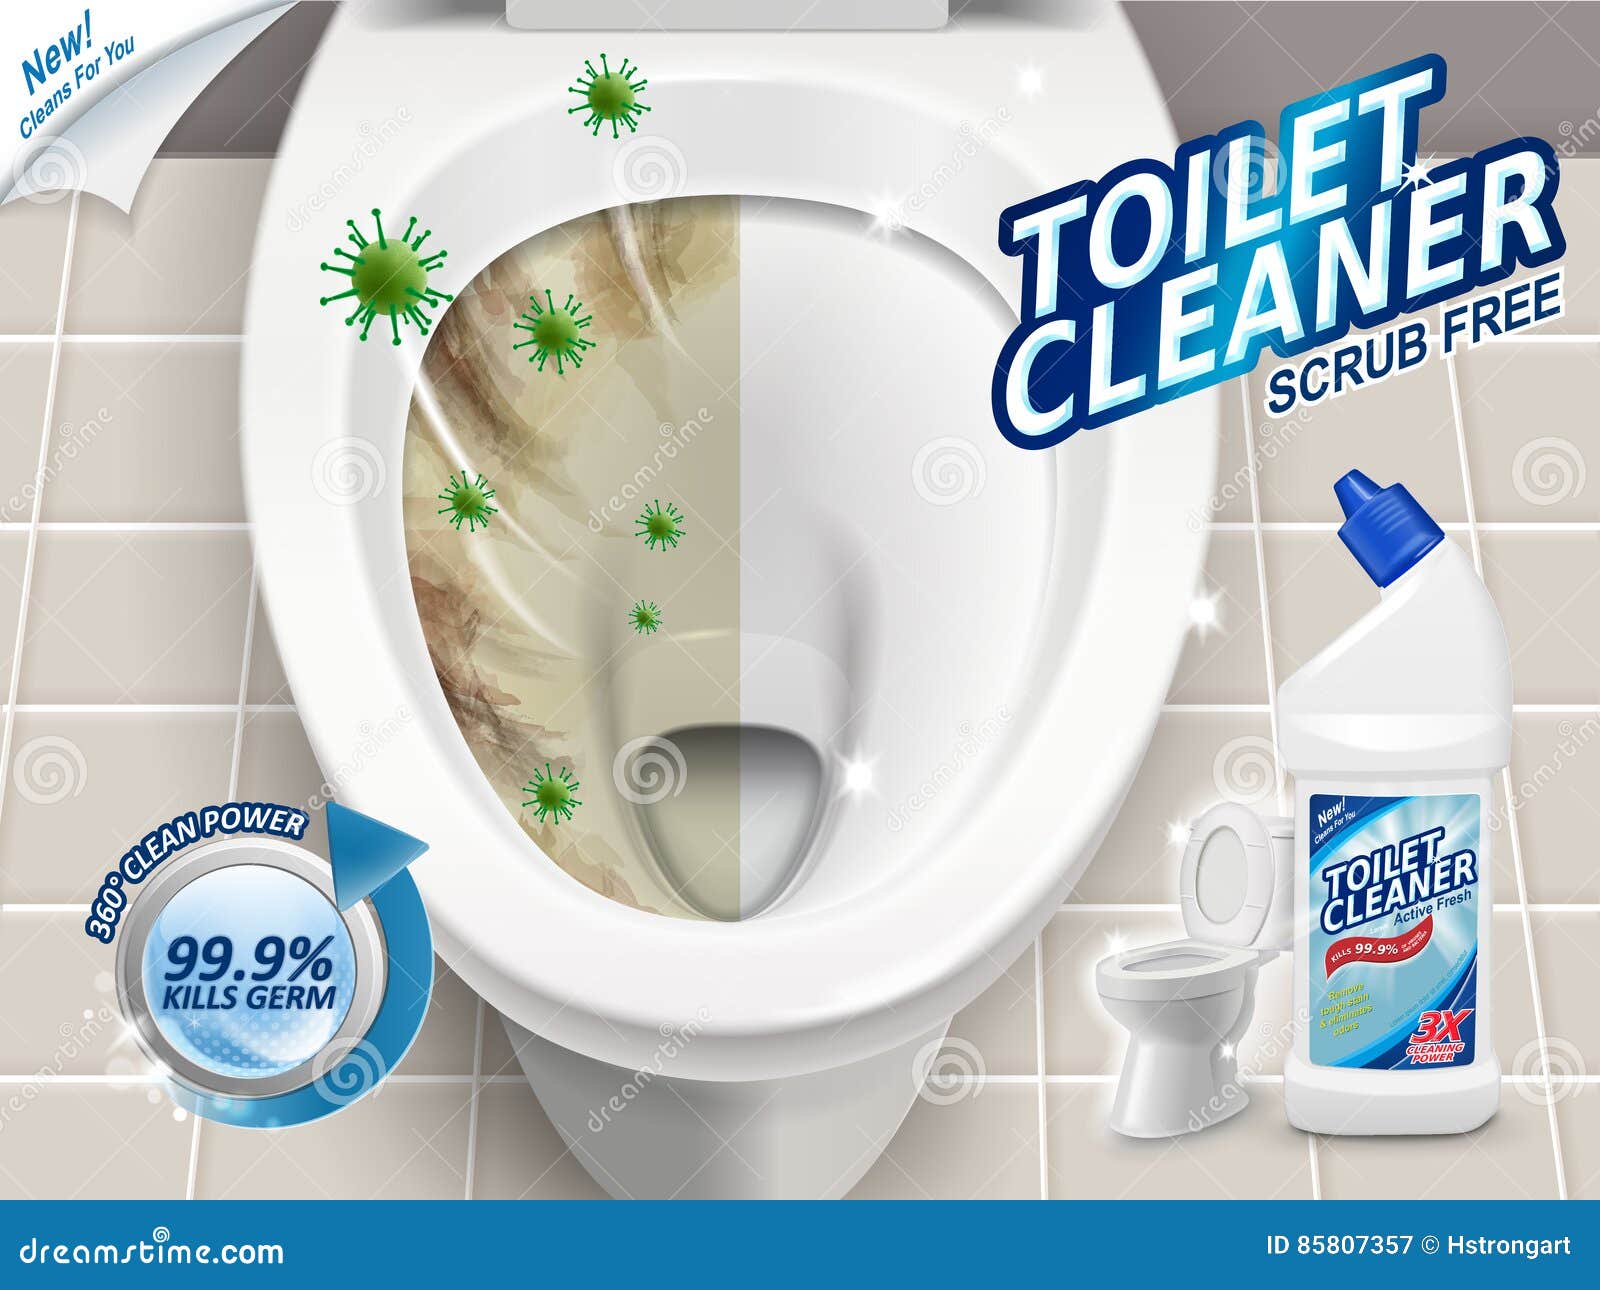 Toilet Cleaner Stock Illustrations – 19,562 Toilet Cleaner Stock  Illustrations, Vectors & Clipart - Dreamstime